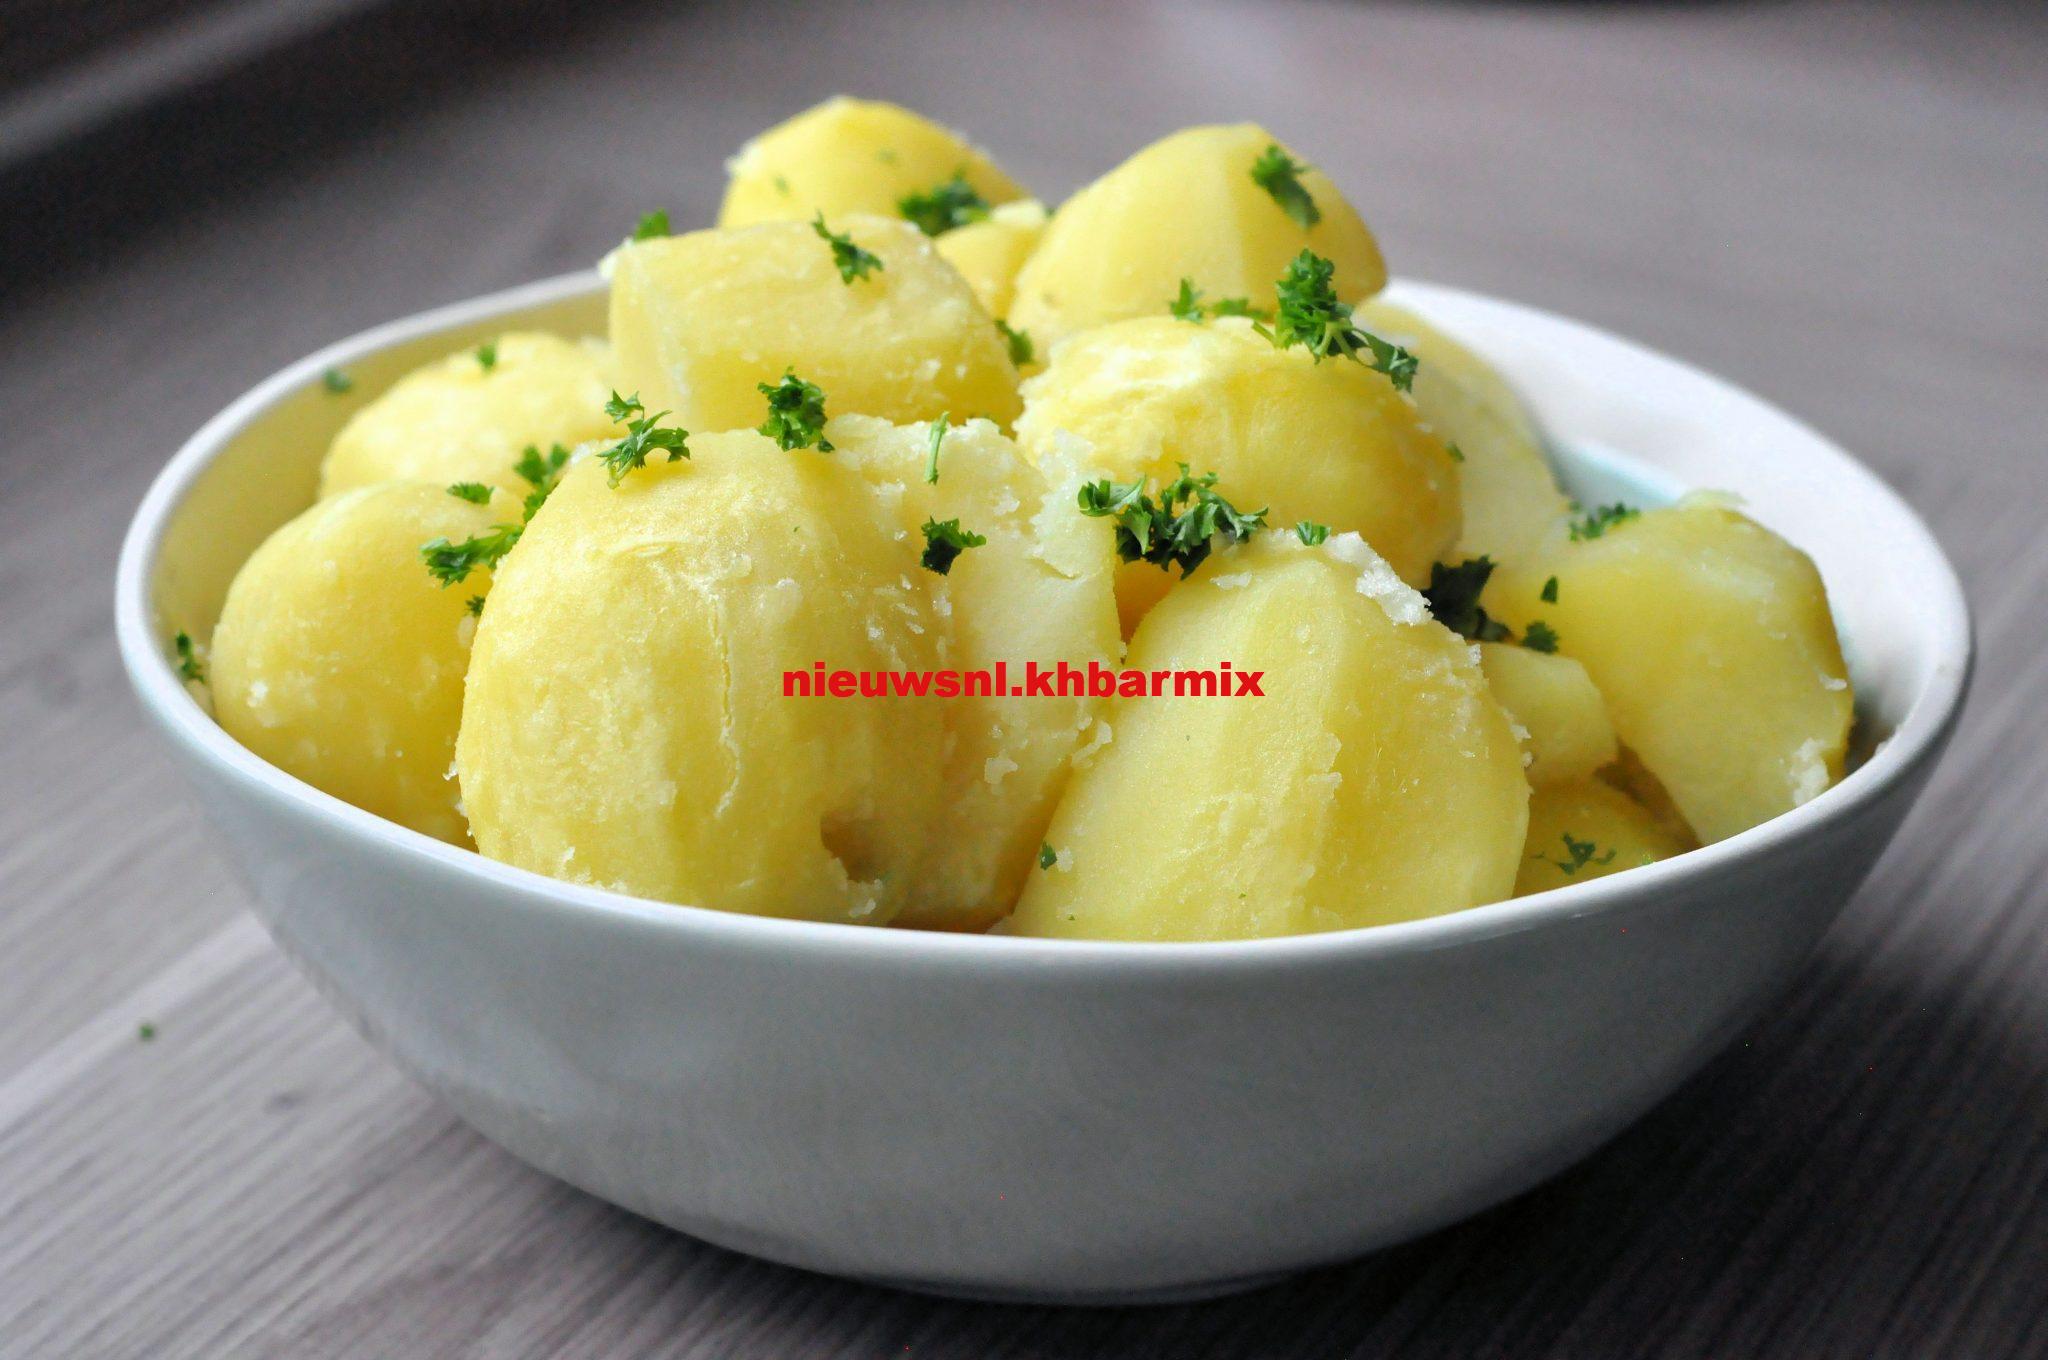 hoe lang aardappels koken